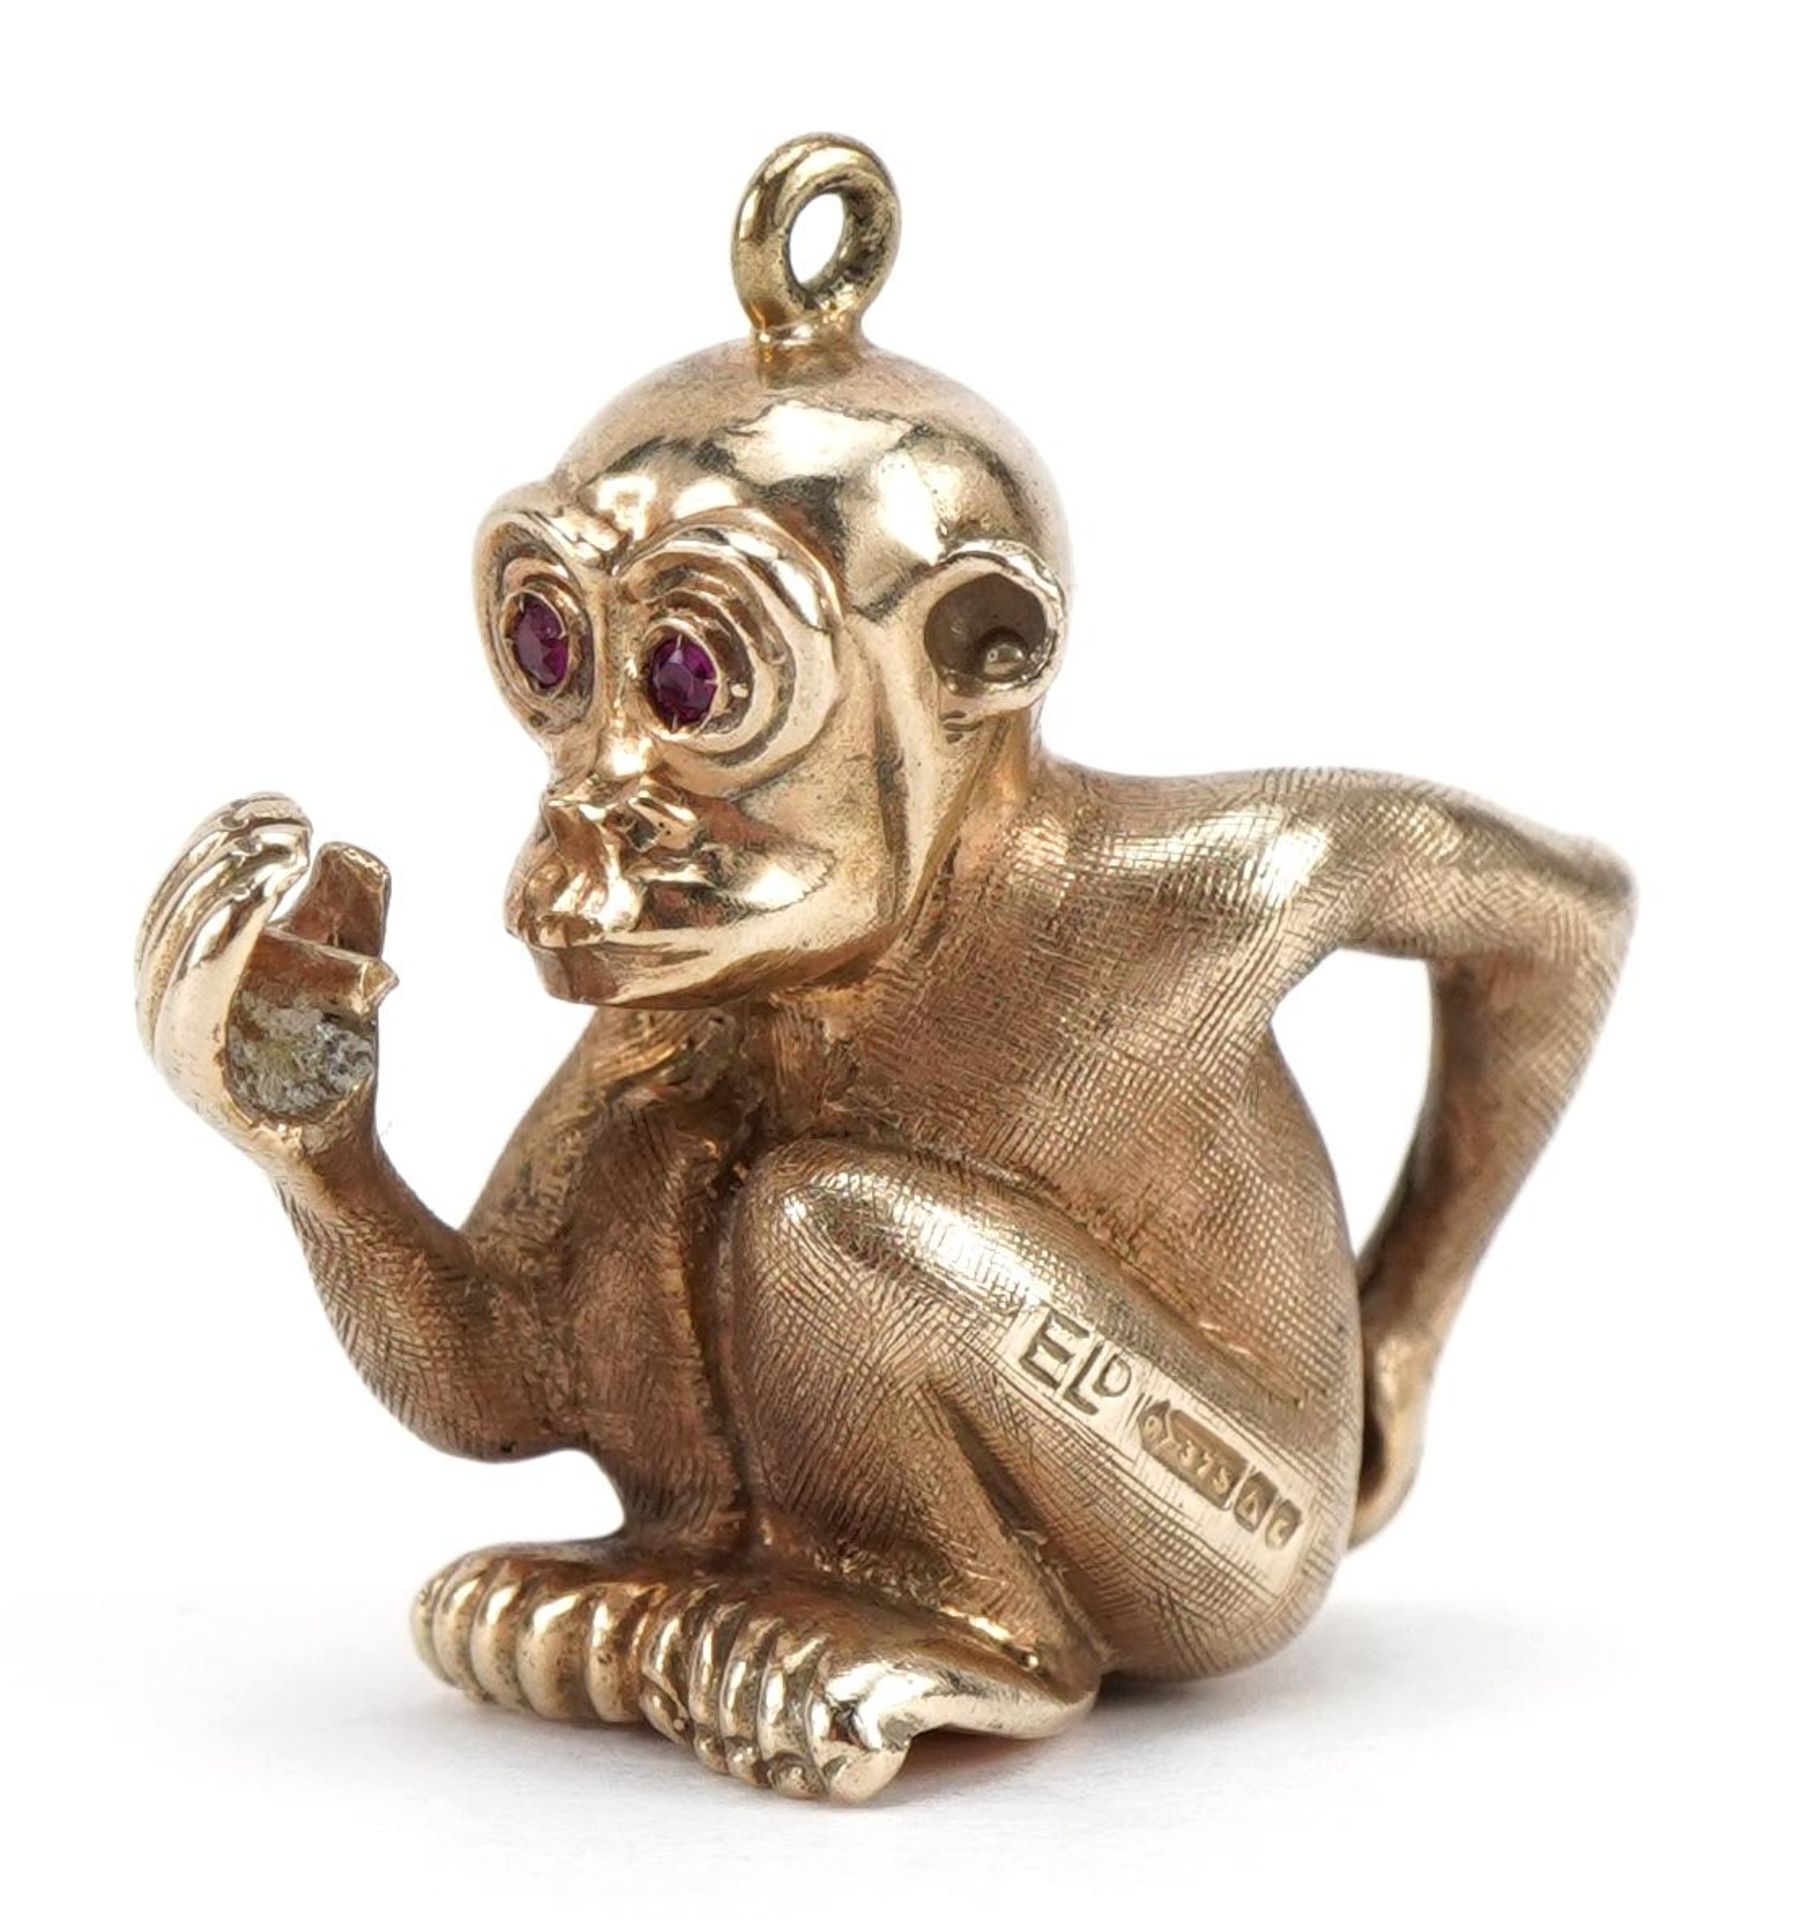 9ct gold monkey pendant with ruby set eyes, 2.3cm high, 6.8g